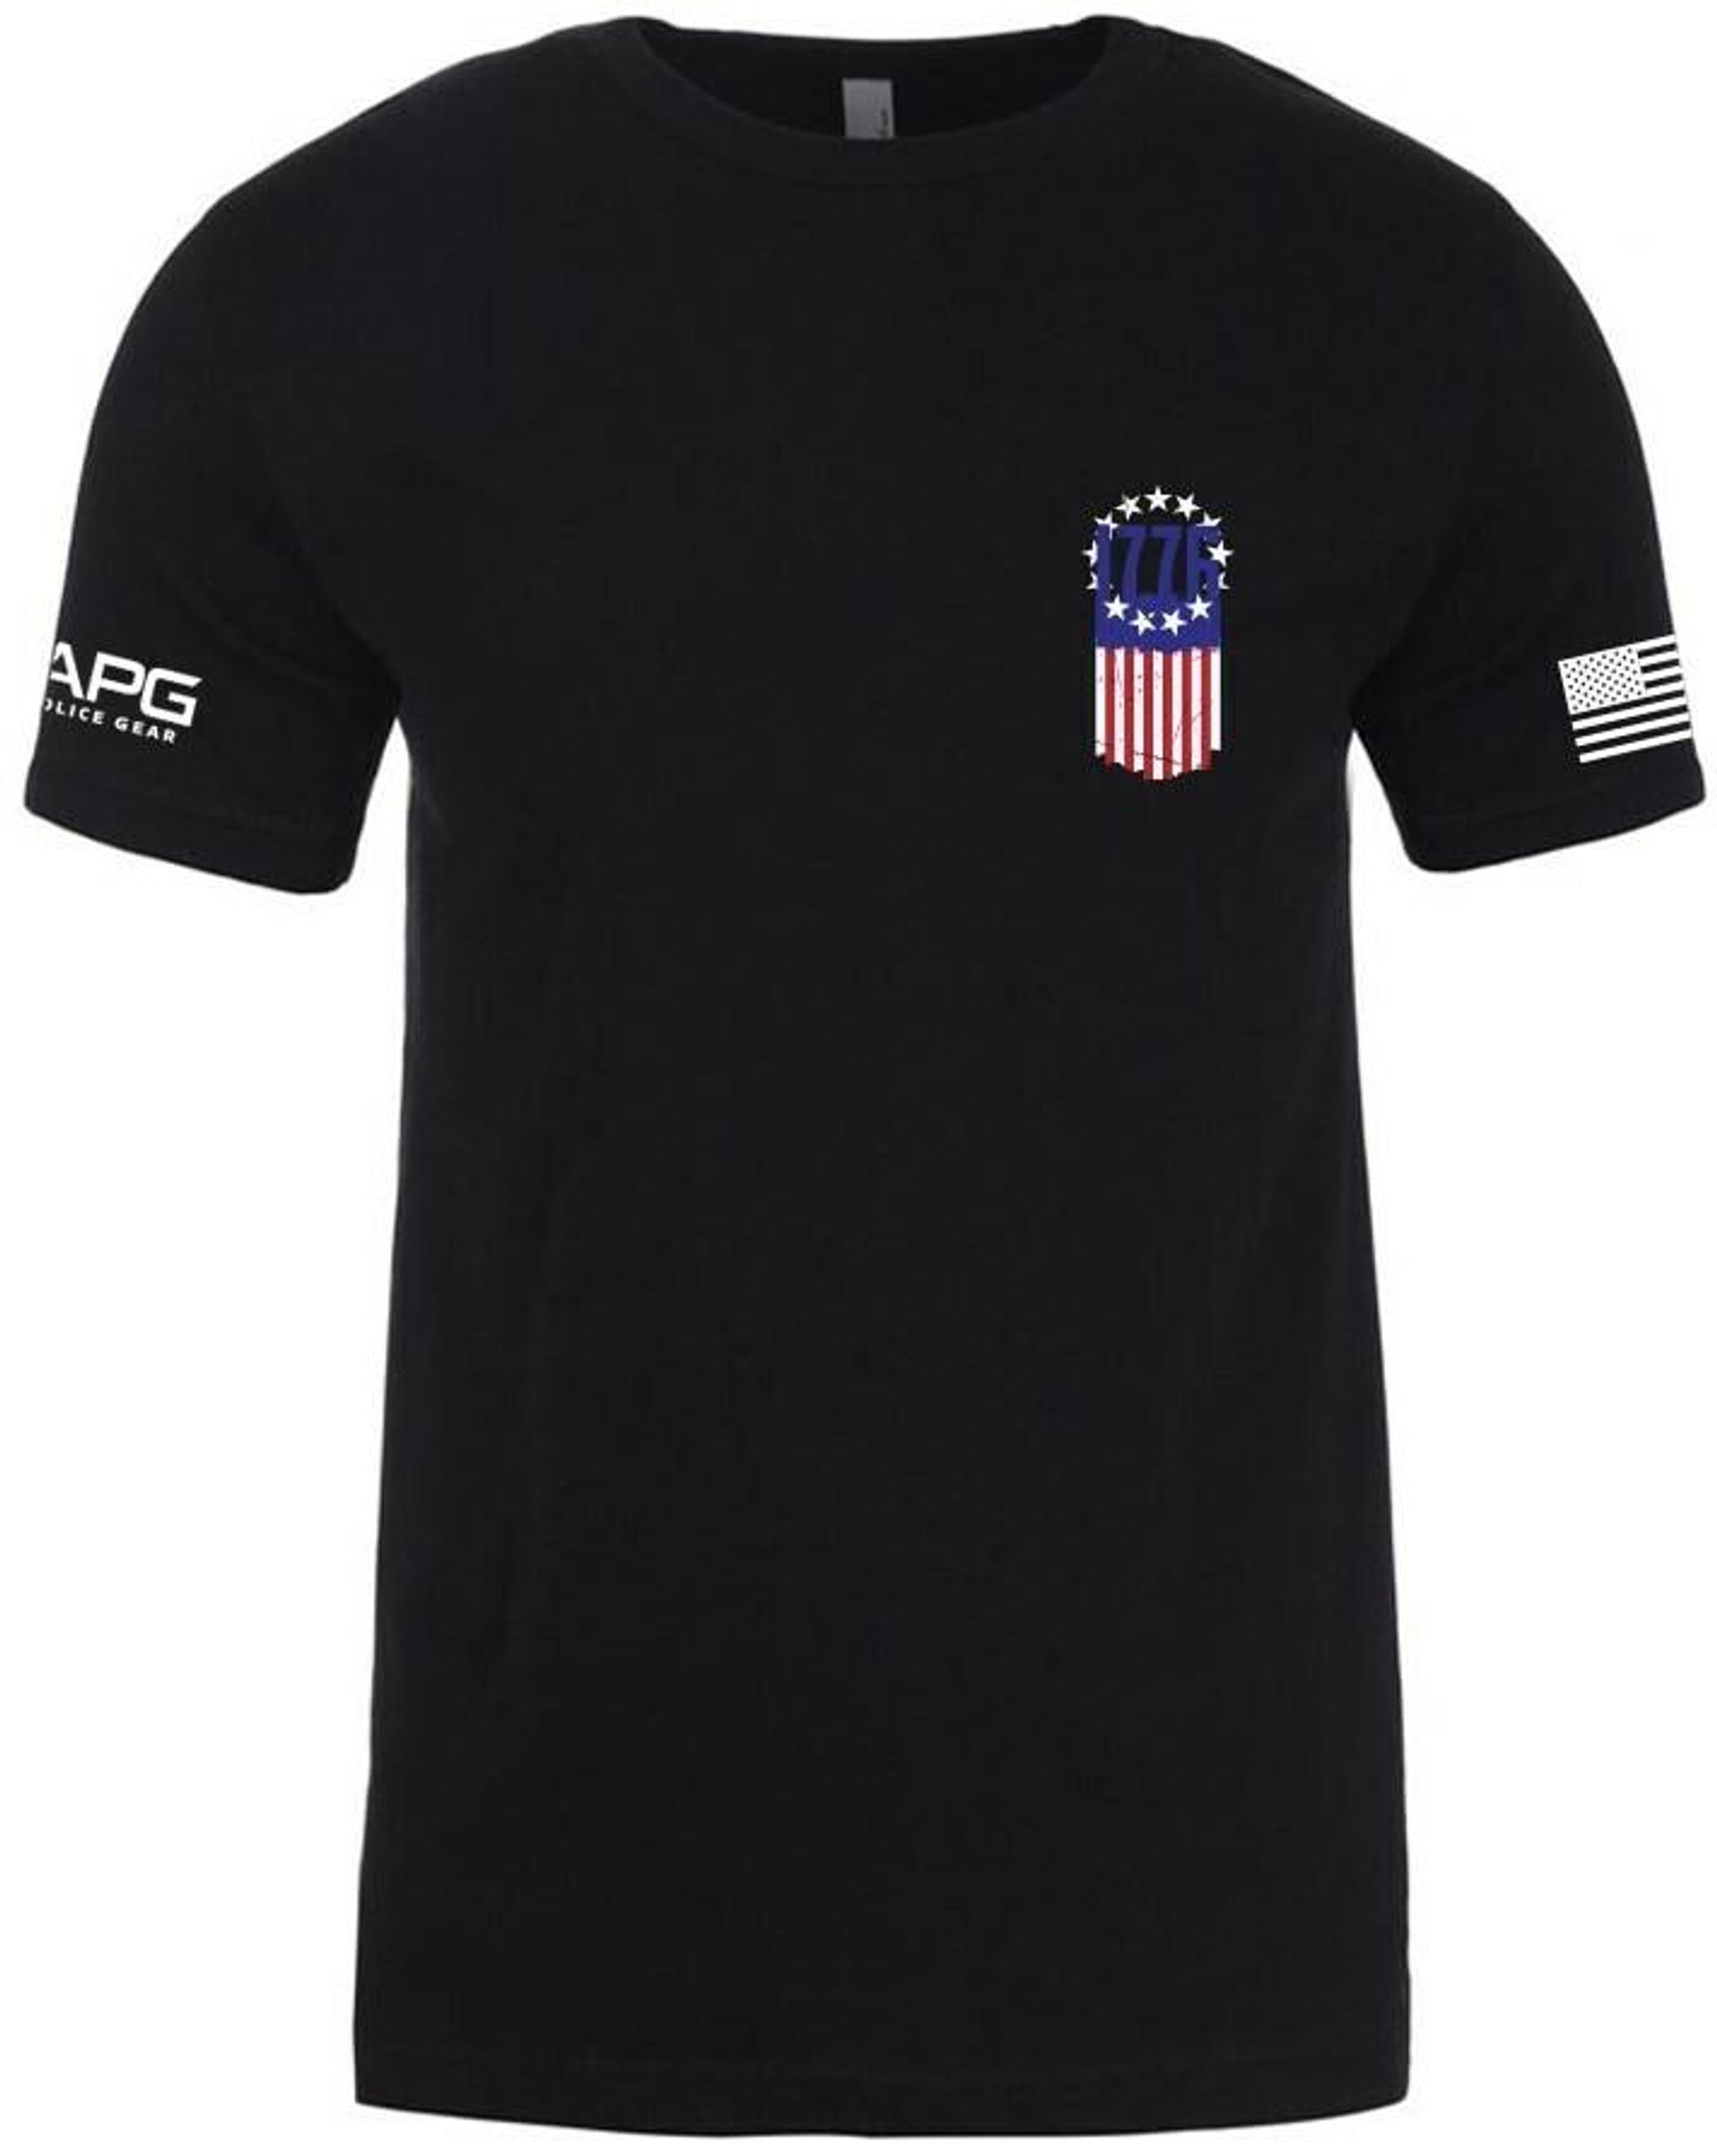 LA Police Gear 1776 Flag T-Shirt